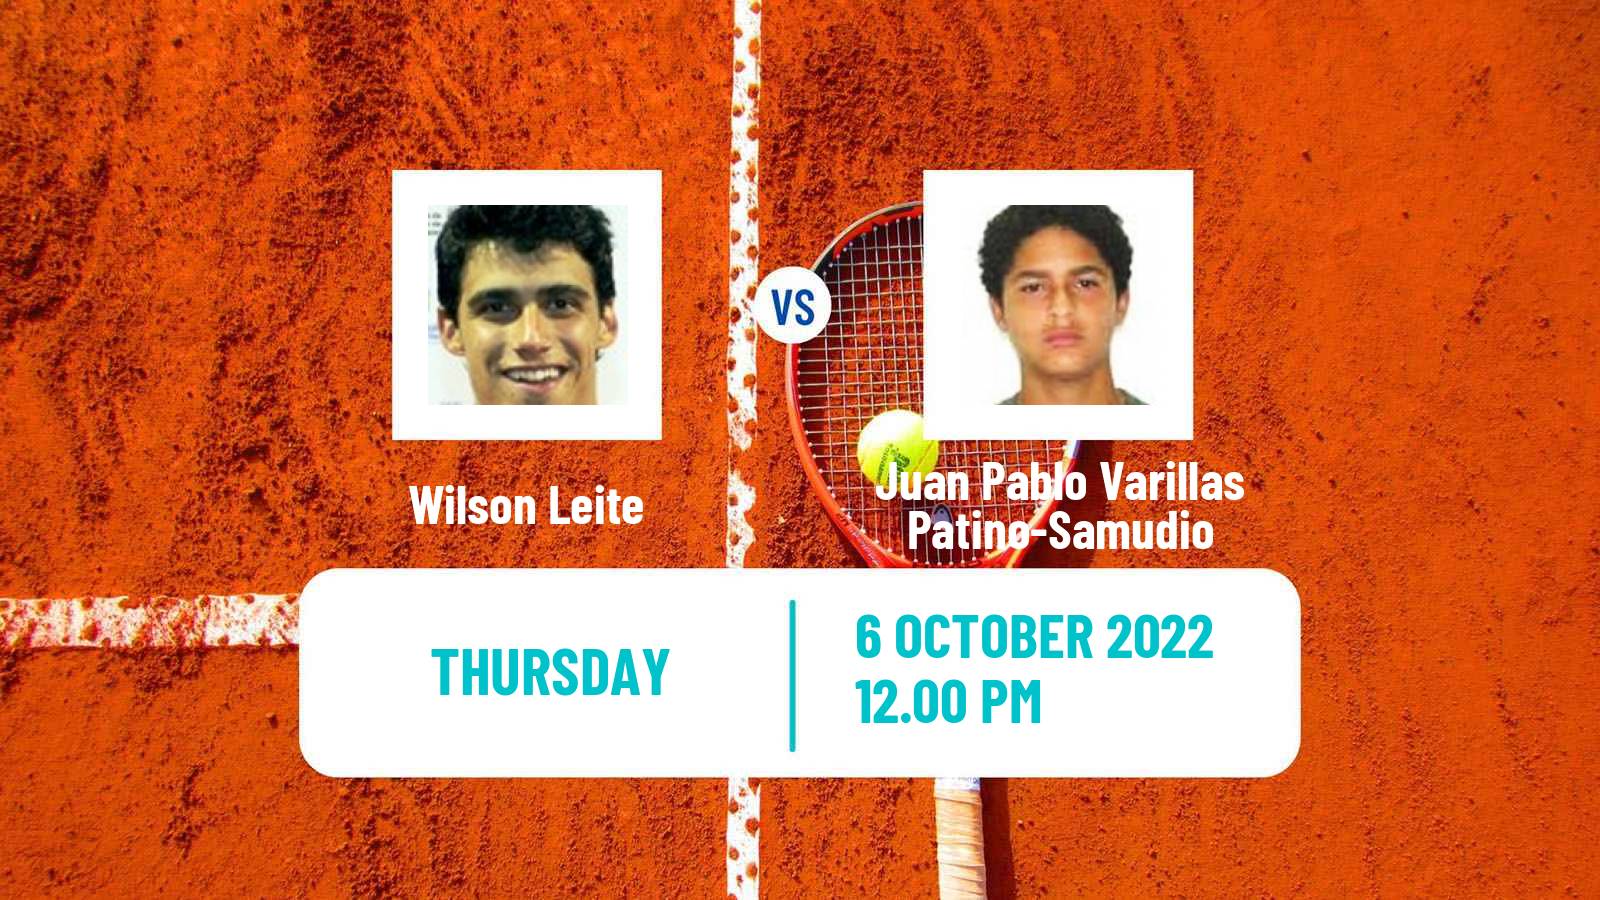 Tennis ATP Challenger Wilson Leite - Juan Pablo Varillas Patino-Samudio